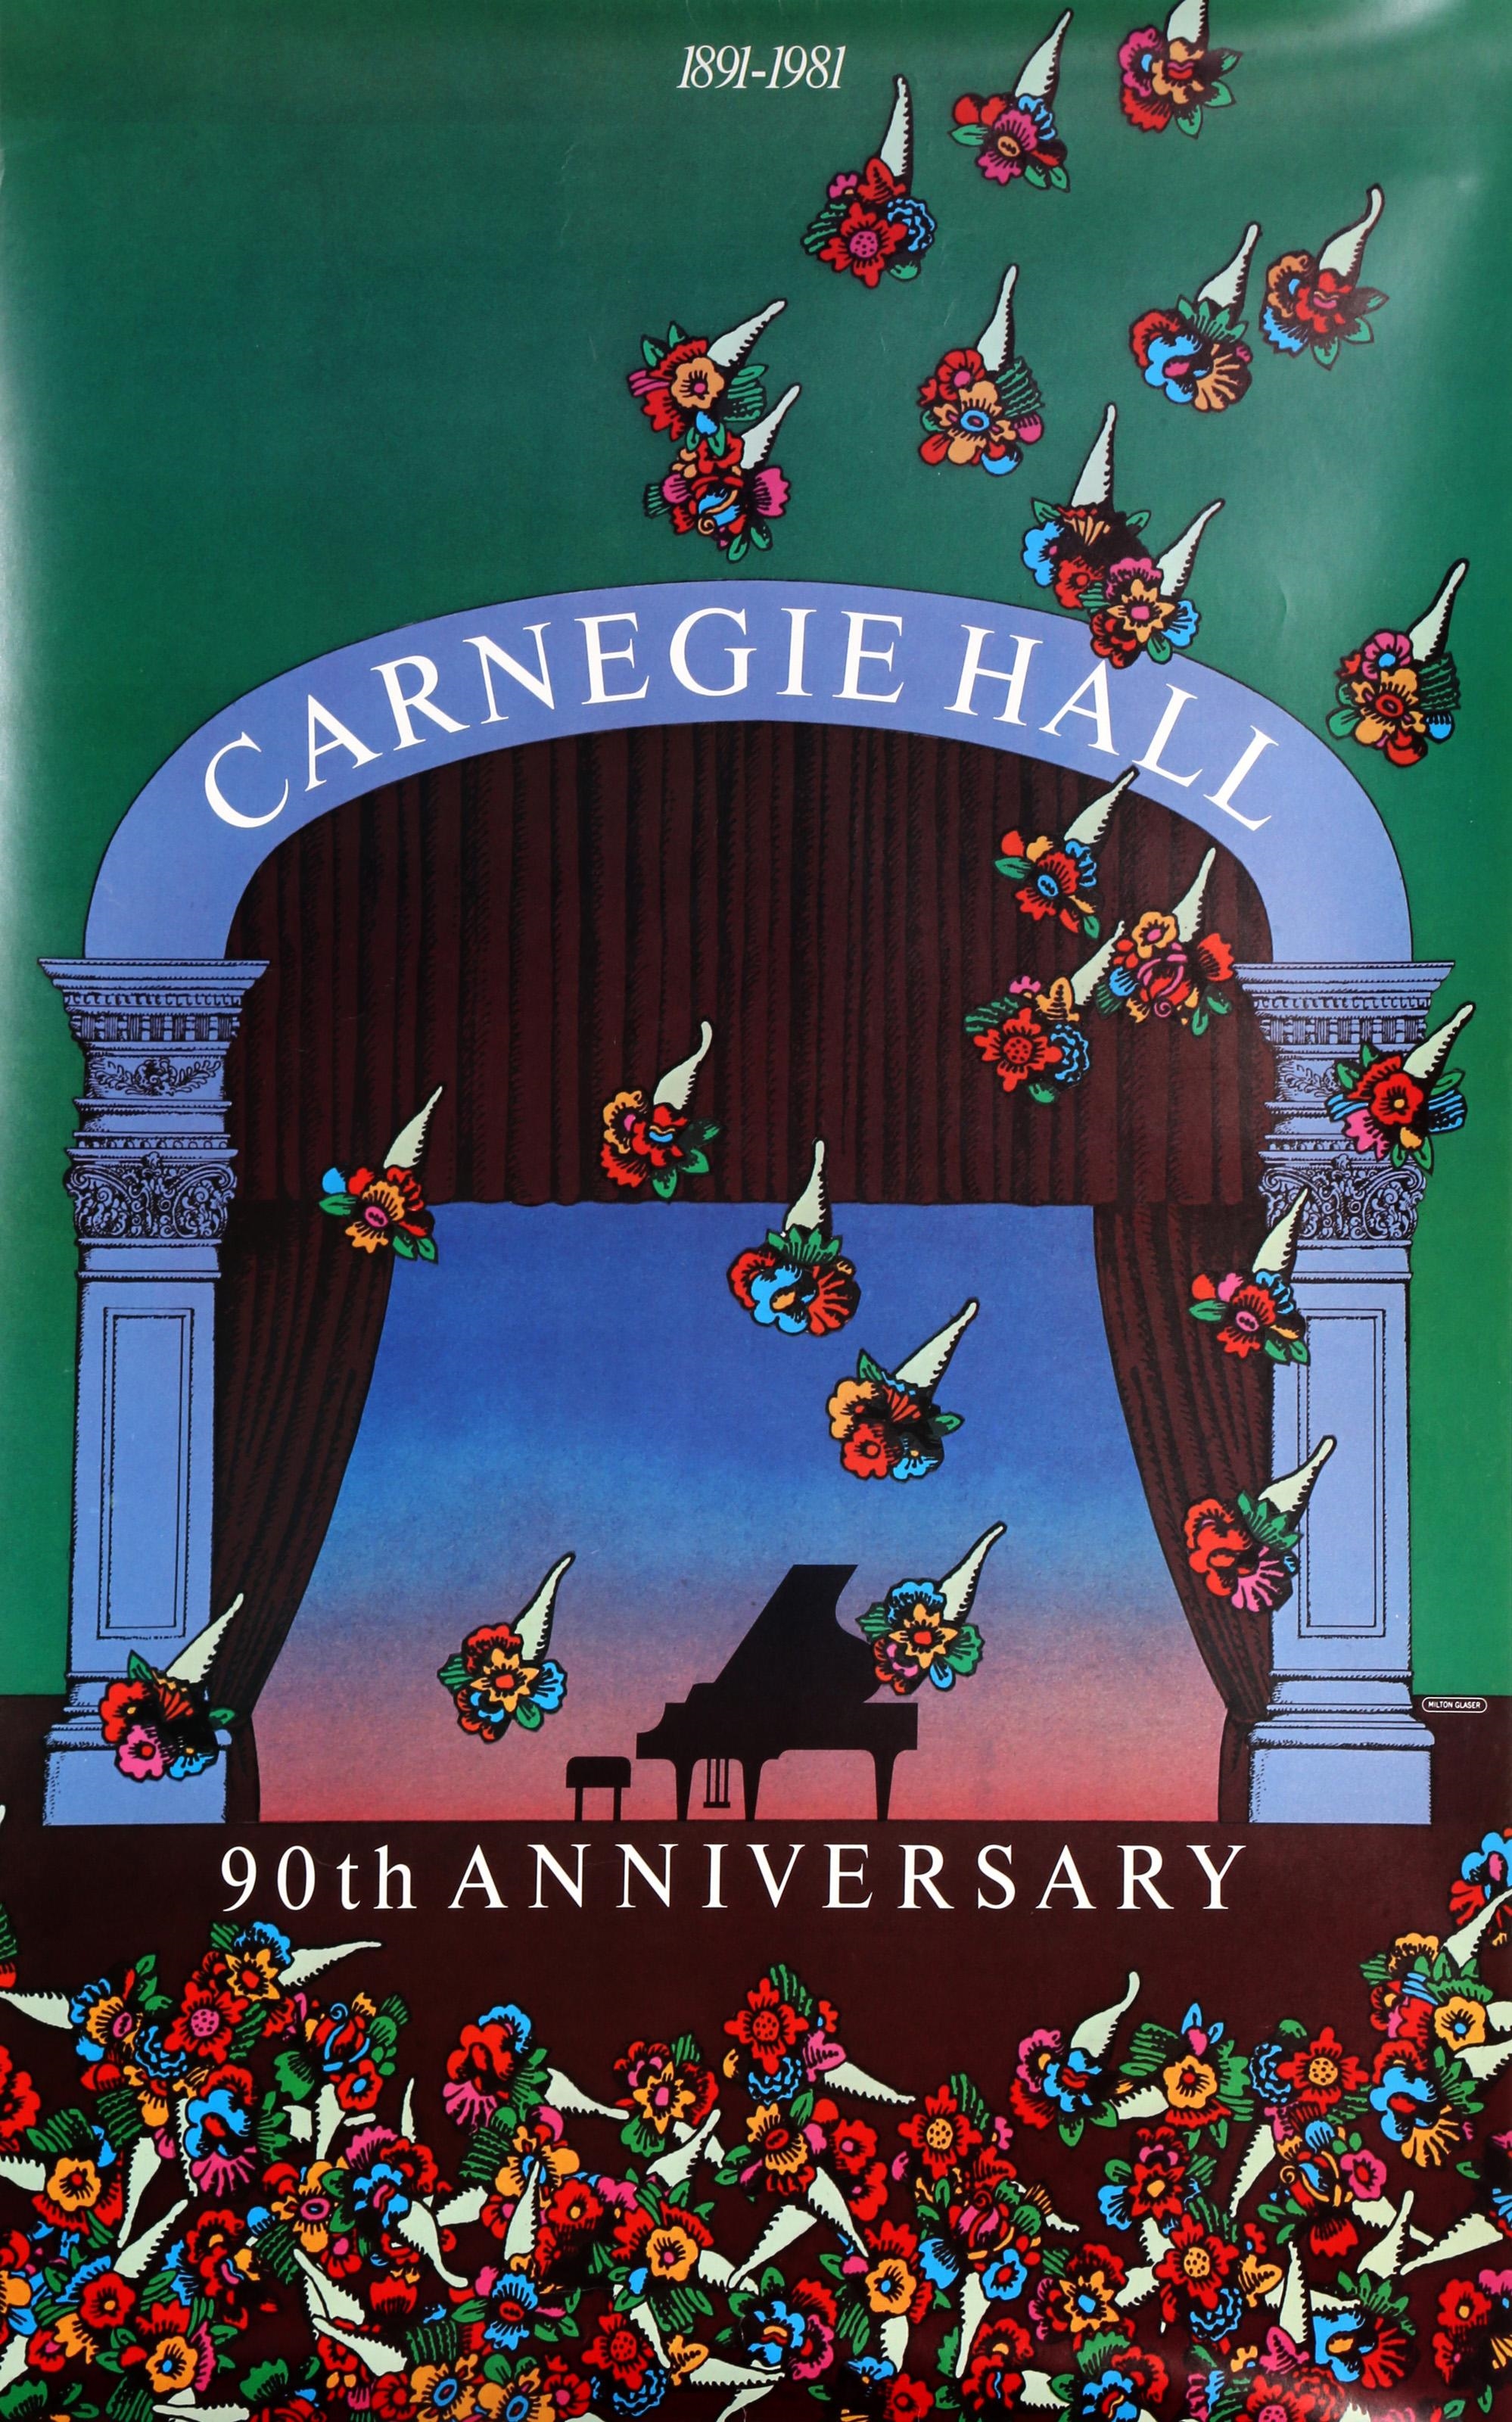 Carnegie Hall - 90th Anniversary by Milton Glaser, 1981